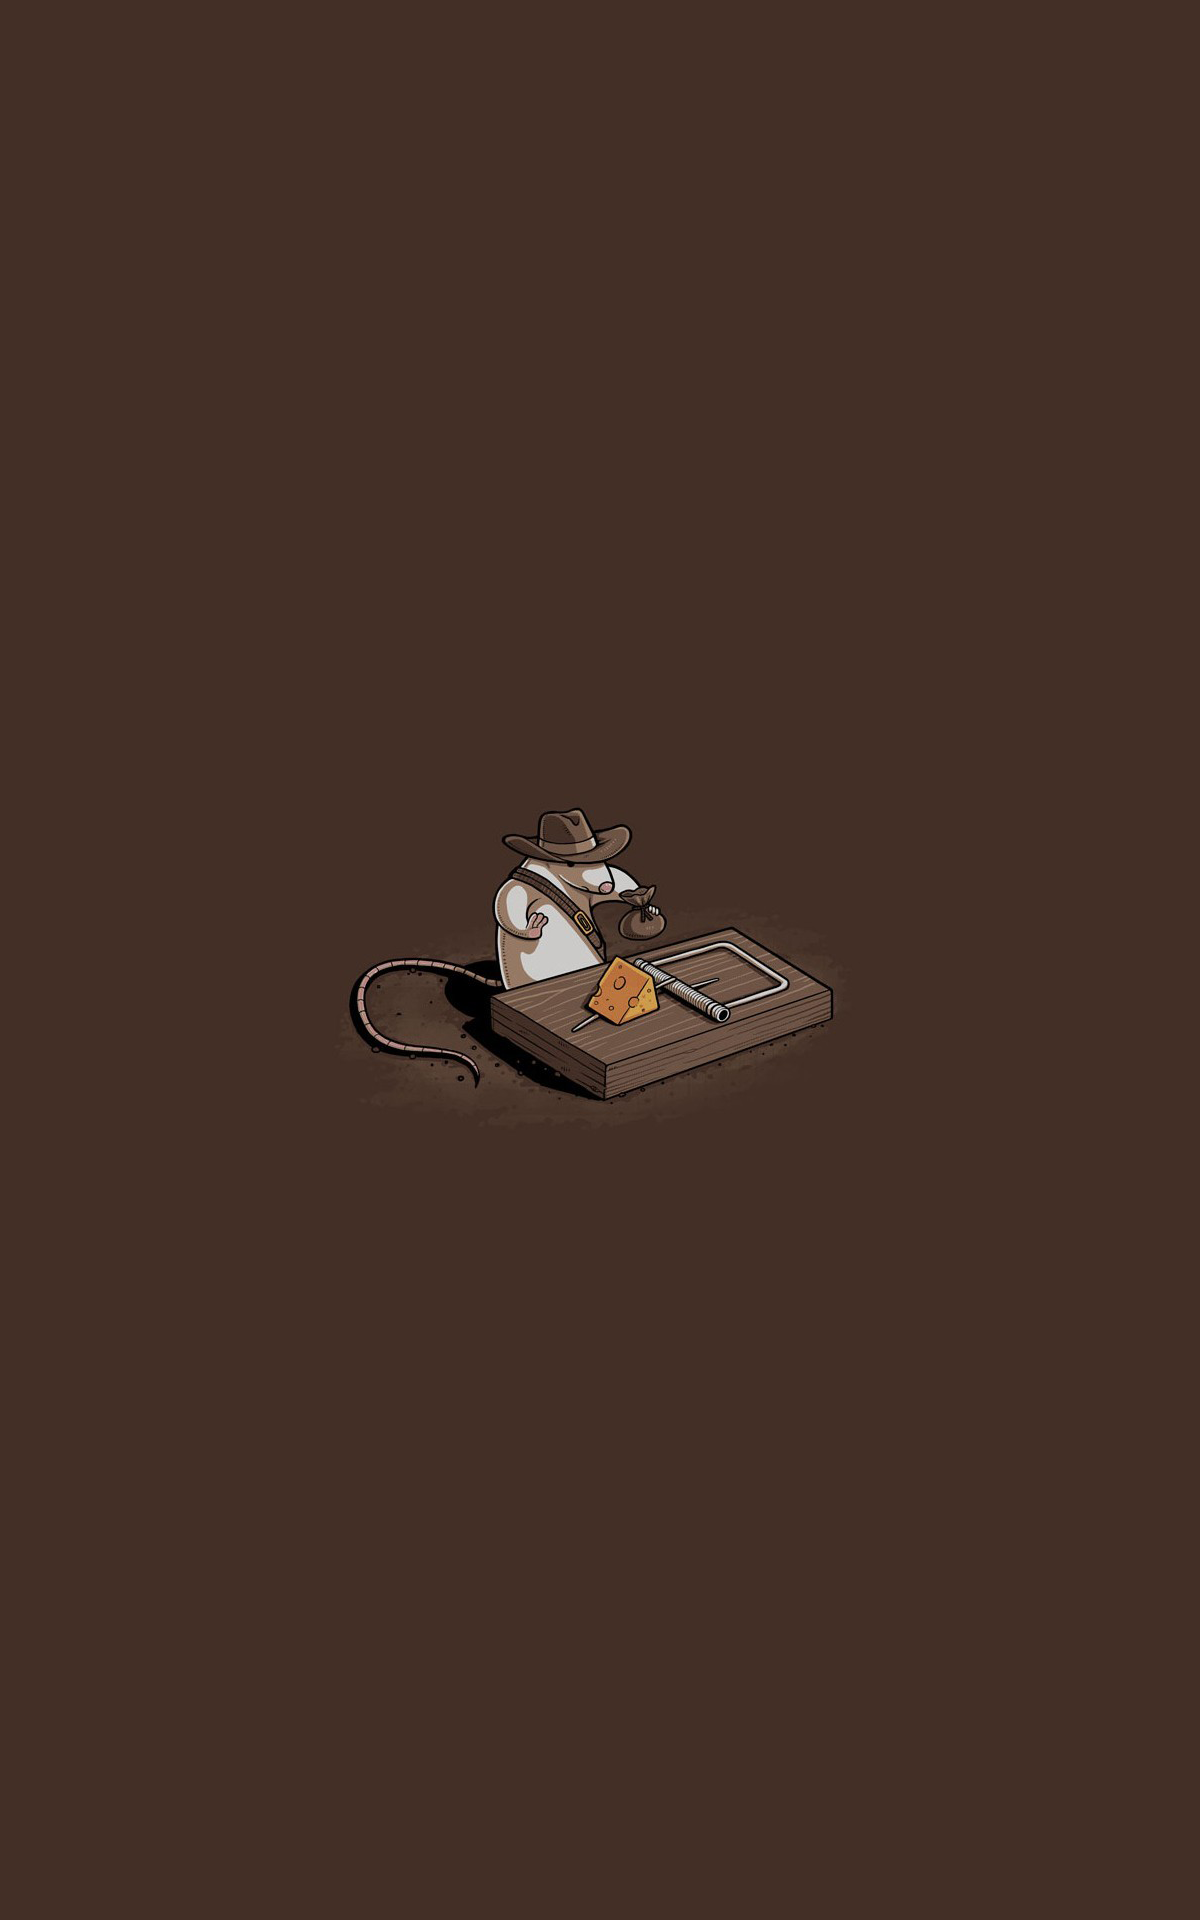 General 1200x1920 mice Indiana Jones humor parody minimalism portrait display brown background simple background cheese treasure food hat mousetrap